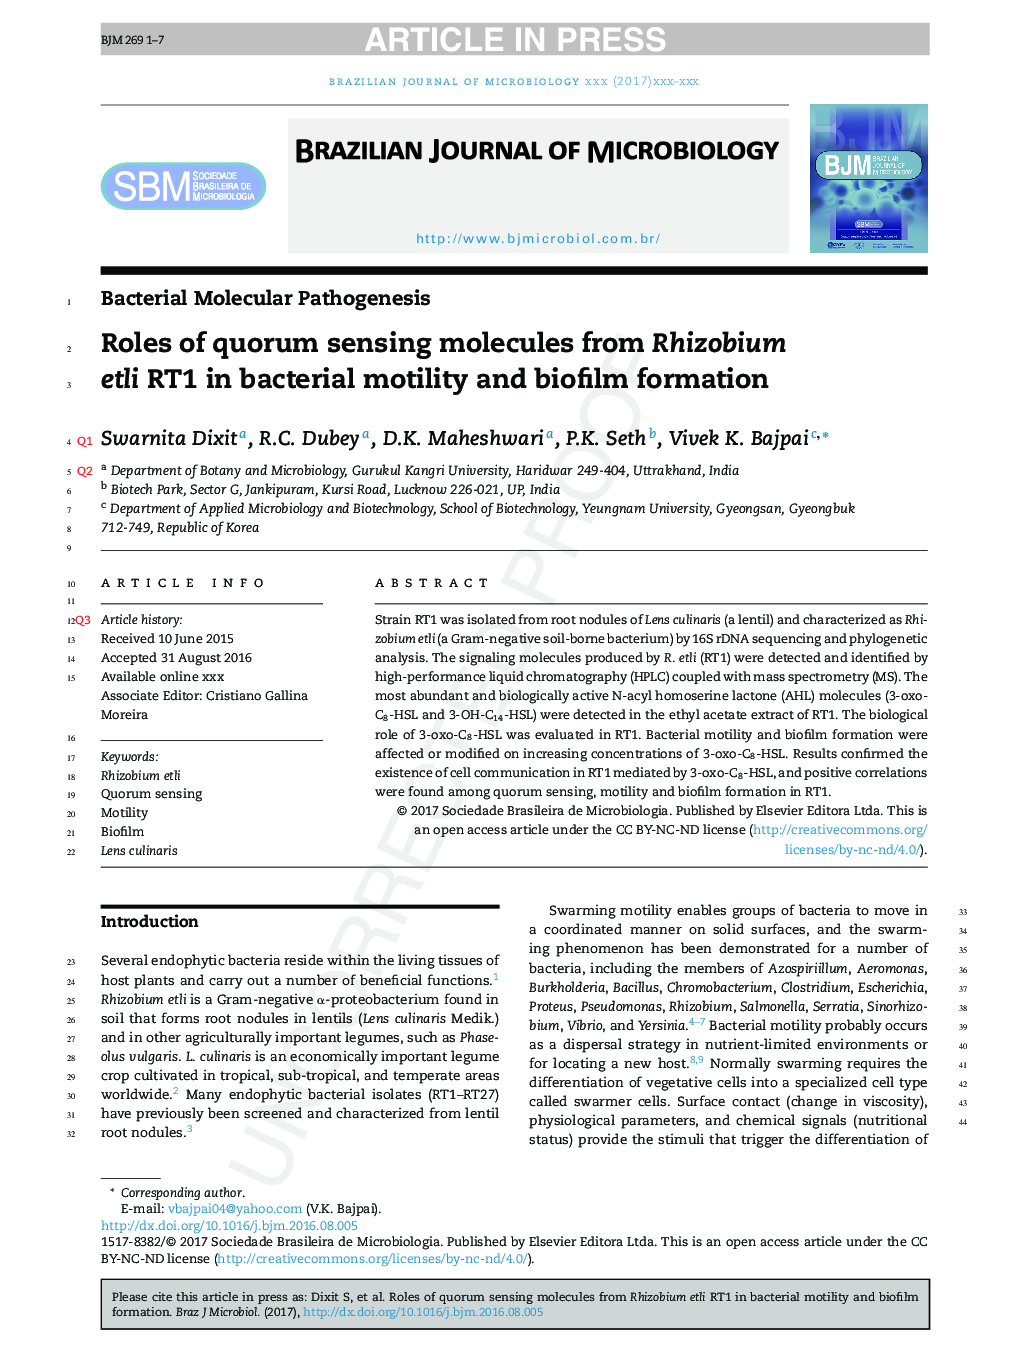 Roles of quorum sensing molecules from Rhizobium etli RT1 in bacterial motility and biofilm formation